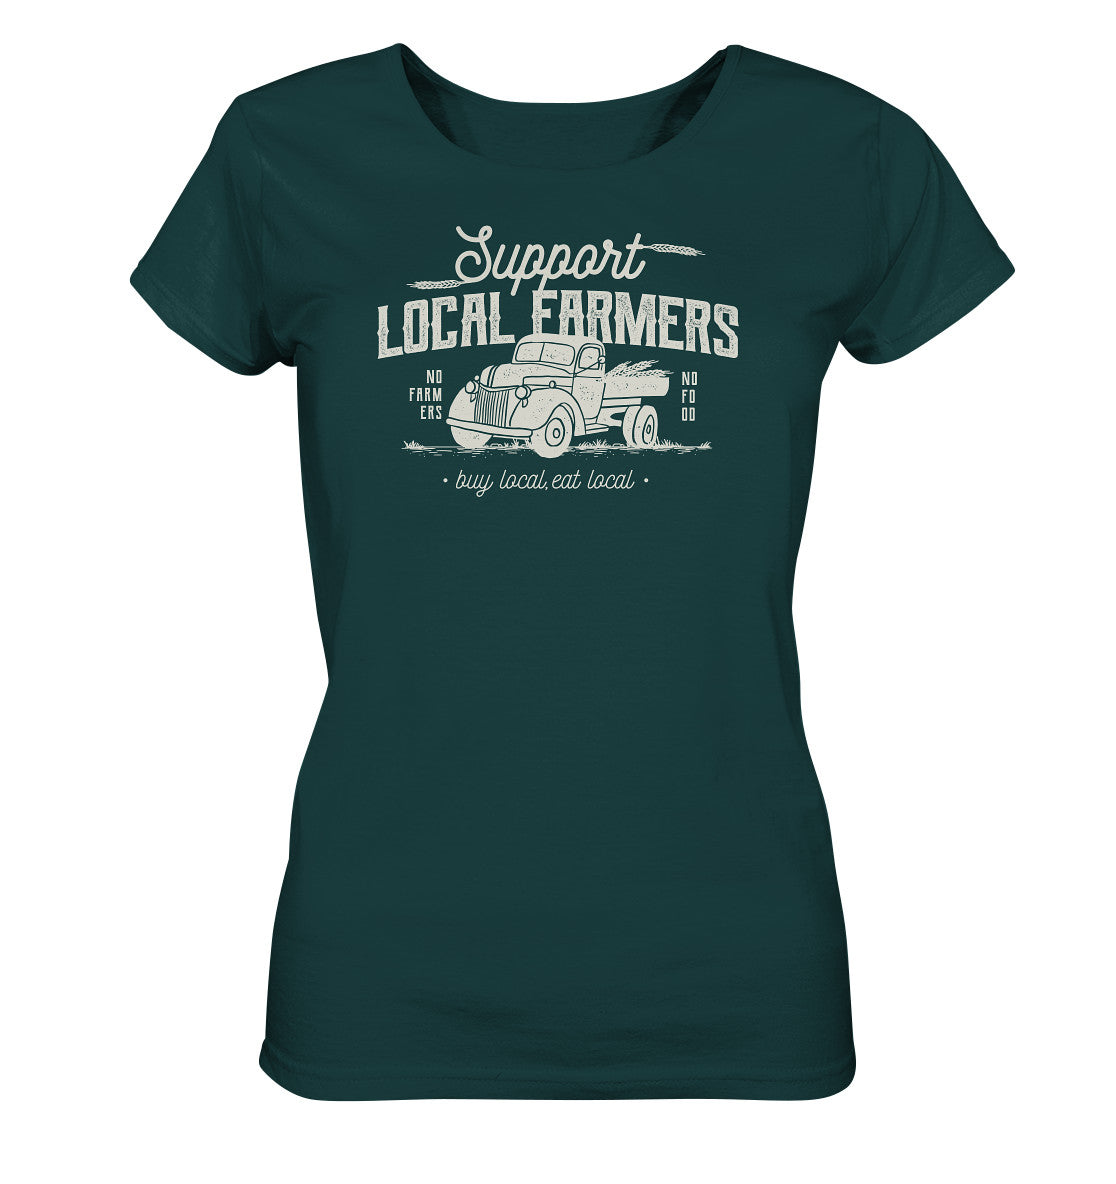 Support local Farmers. Retro Shirt Landwirt. No Farmers no food. Dorfkram® petrol